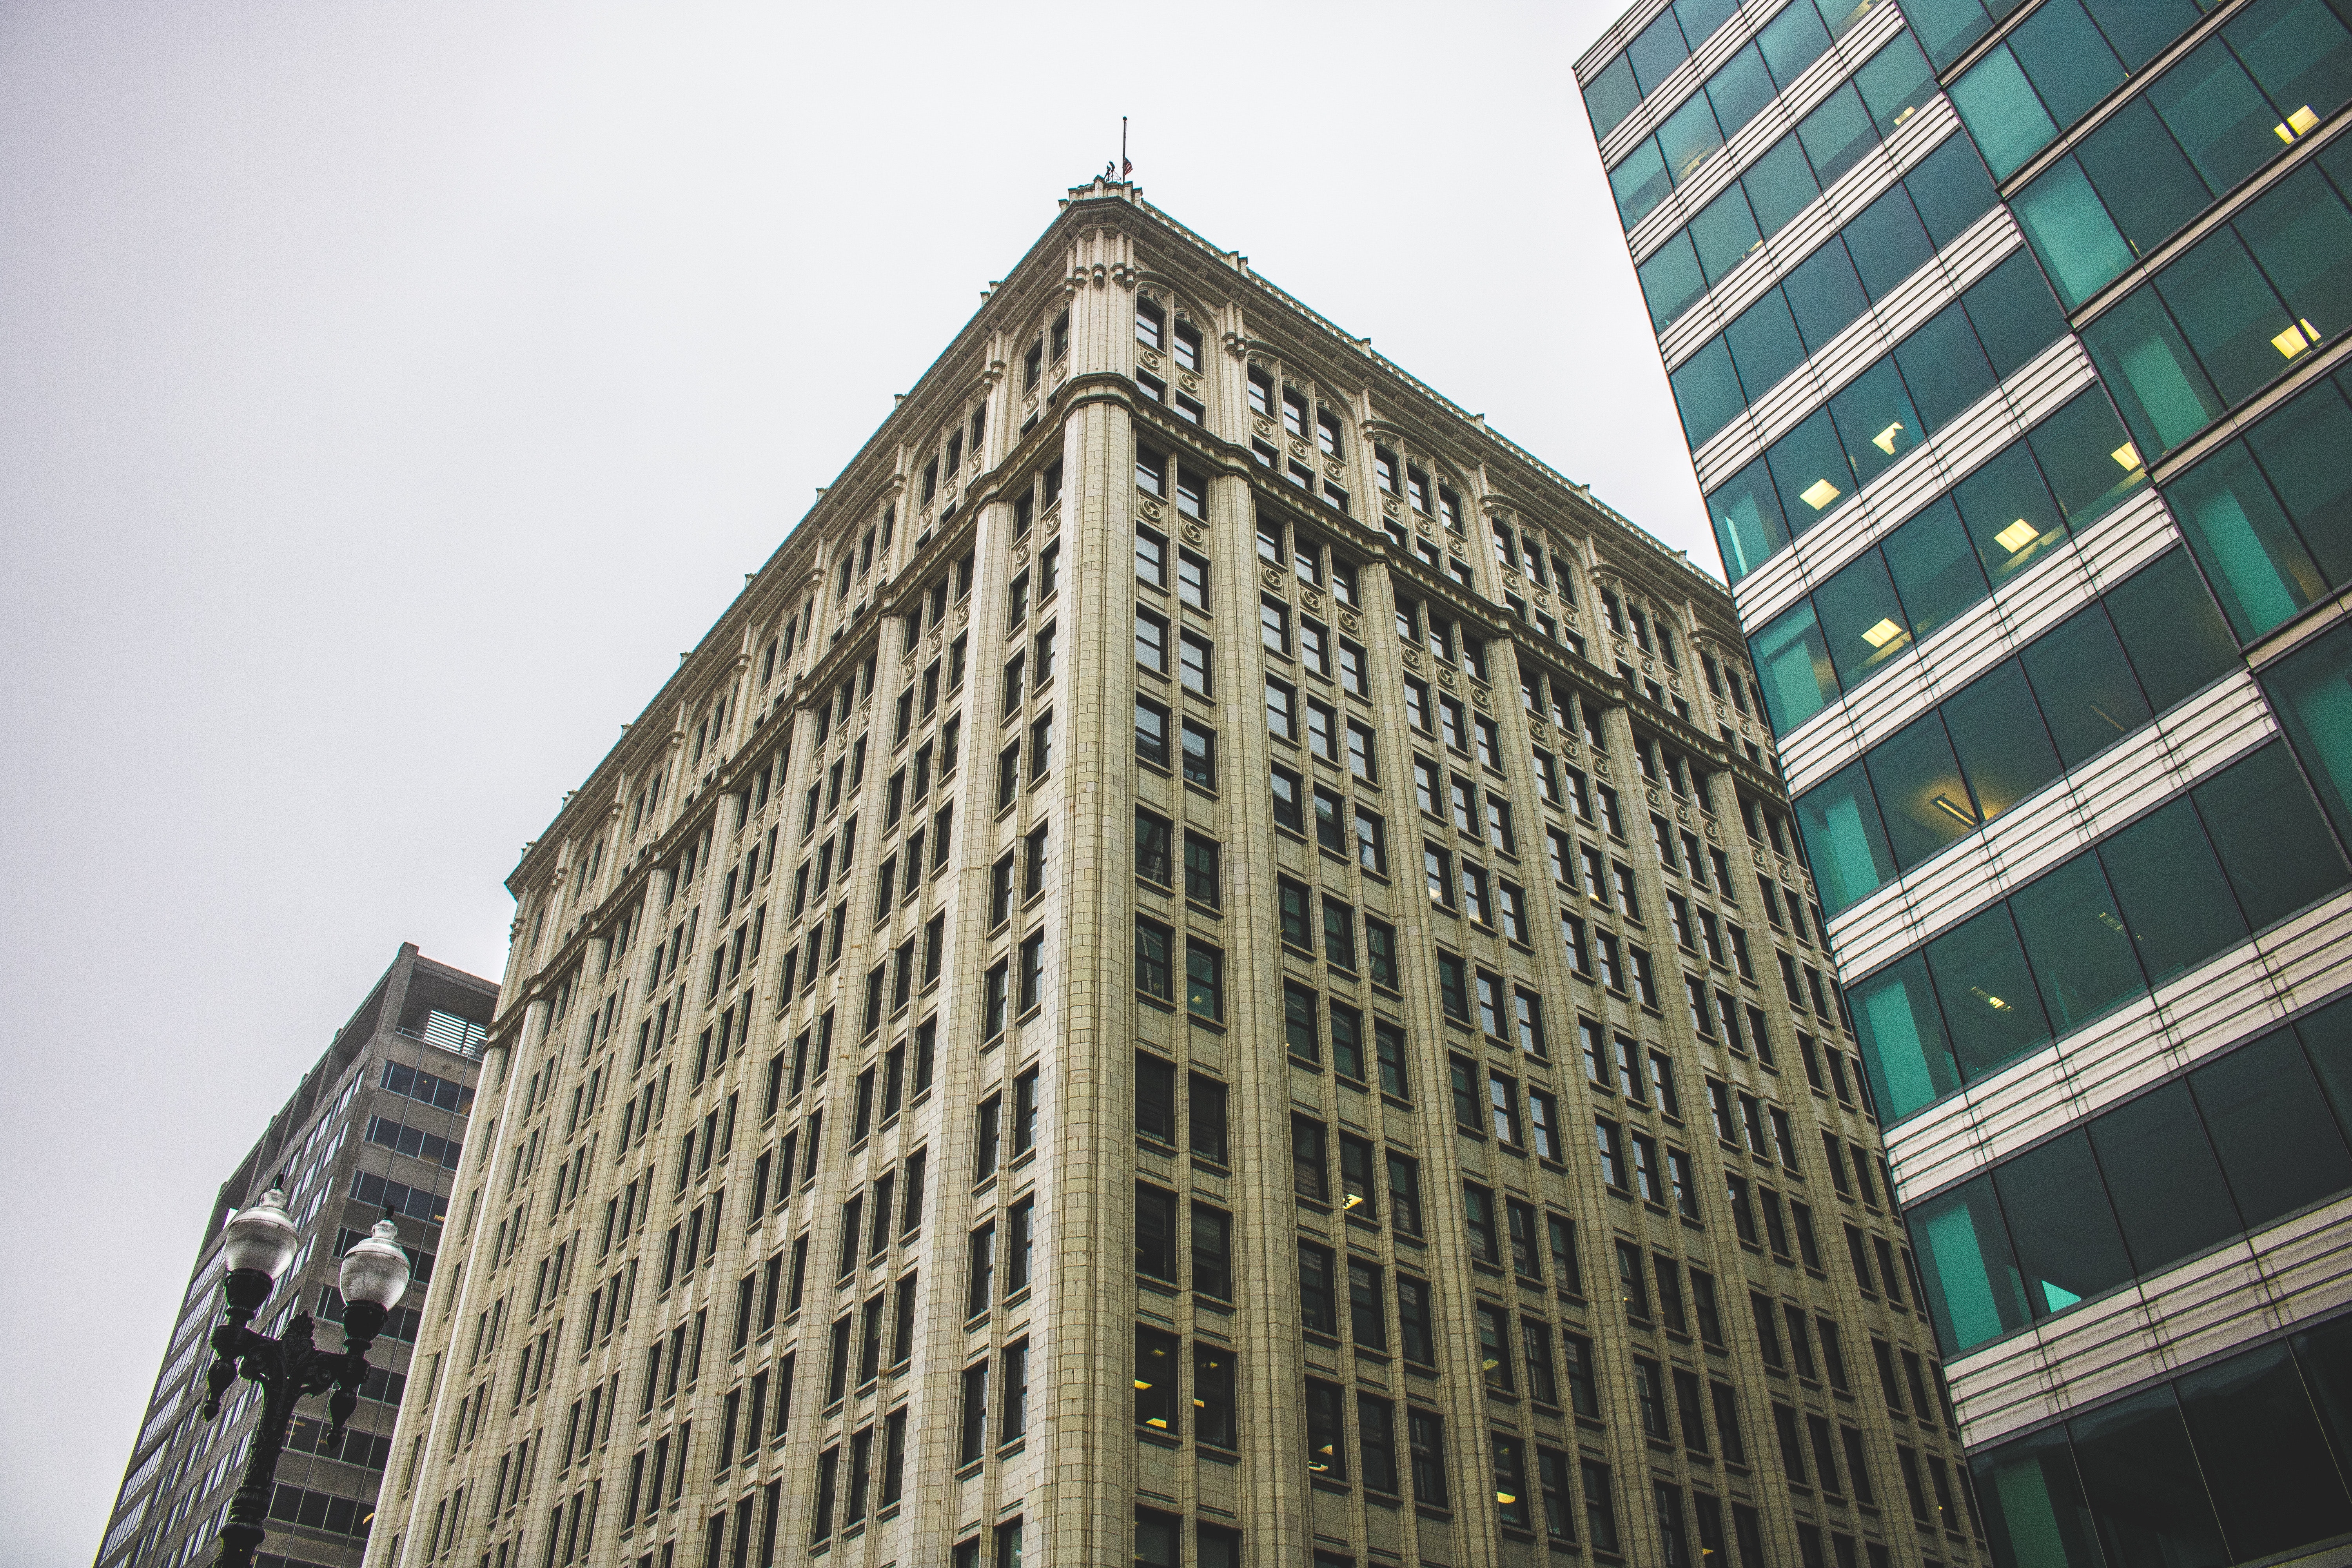 Low Angle Photography of Buildings, Gloomy, Windows, Urban, Tall, HQ Photo